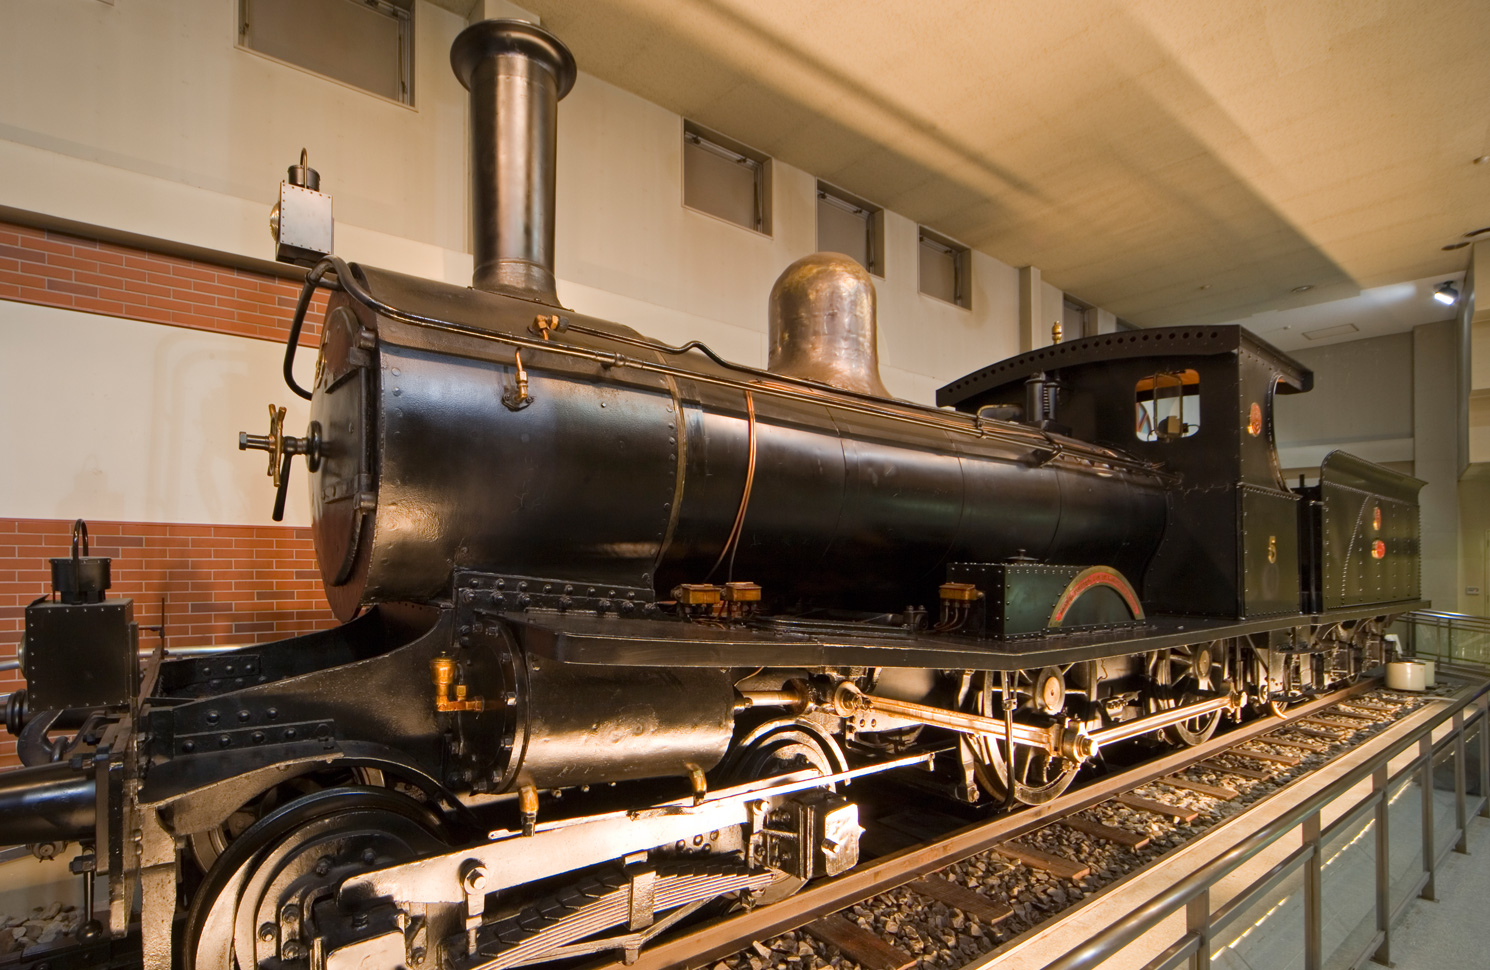 The No. 5 Steam Locomotive